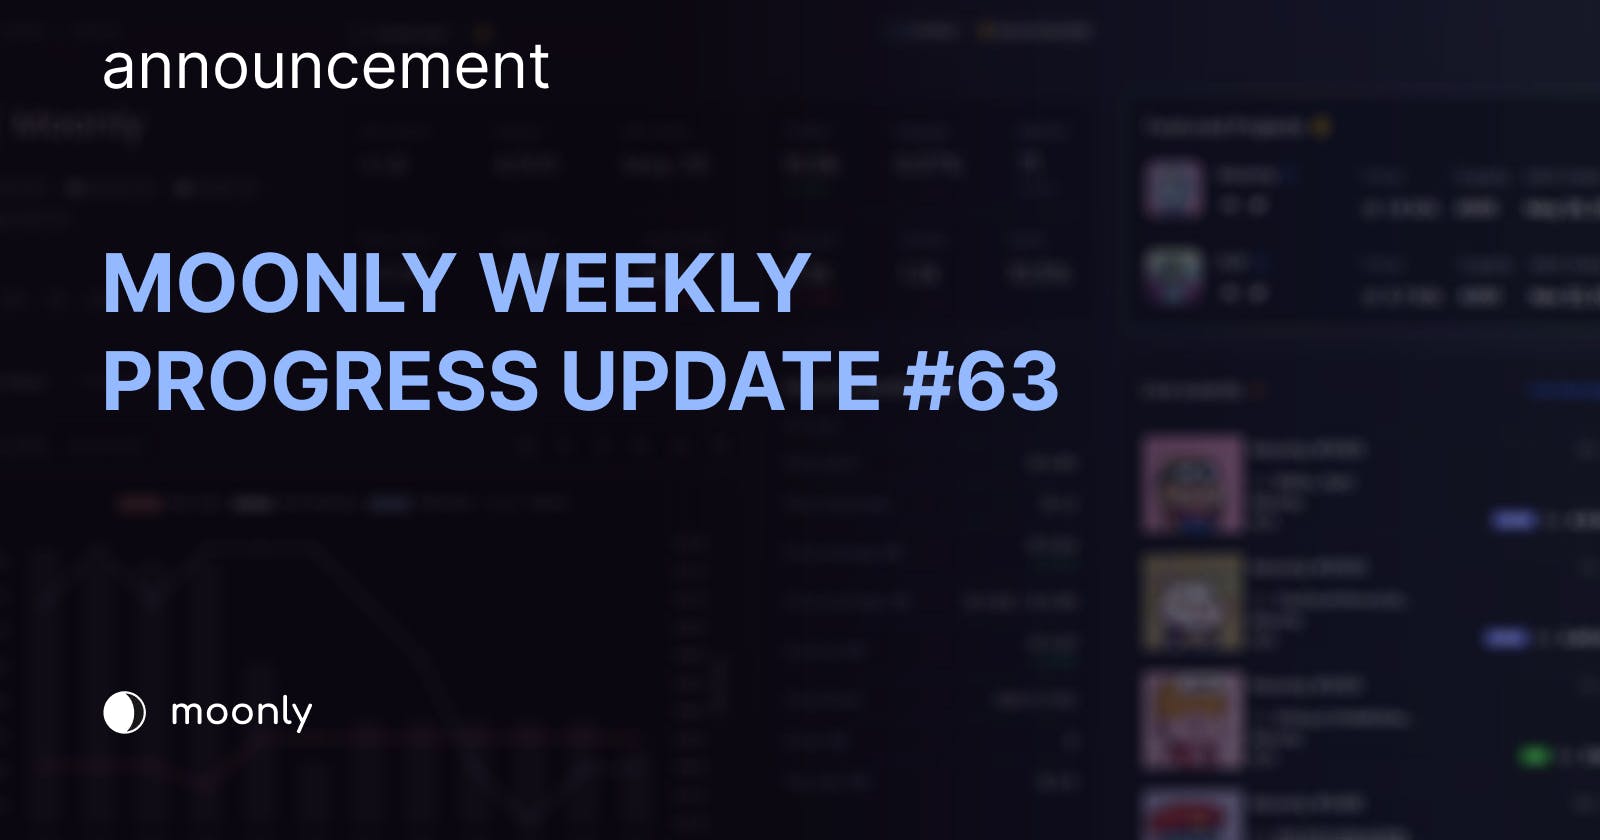 Moonly weekly progress update #63 - Holder Verification Bot V2